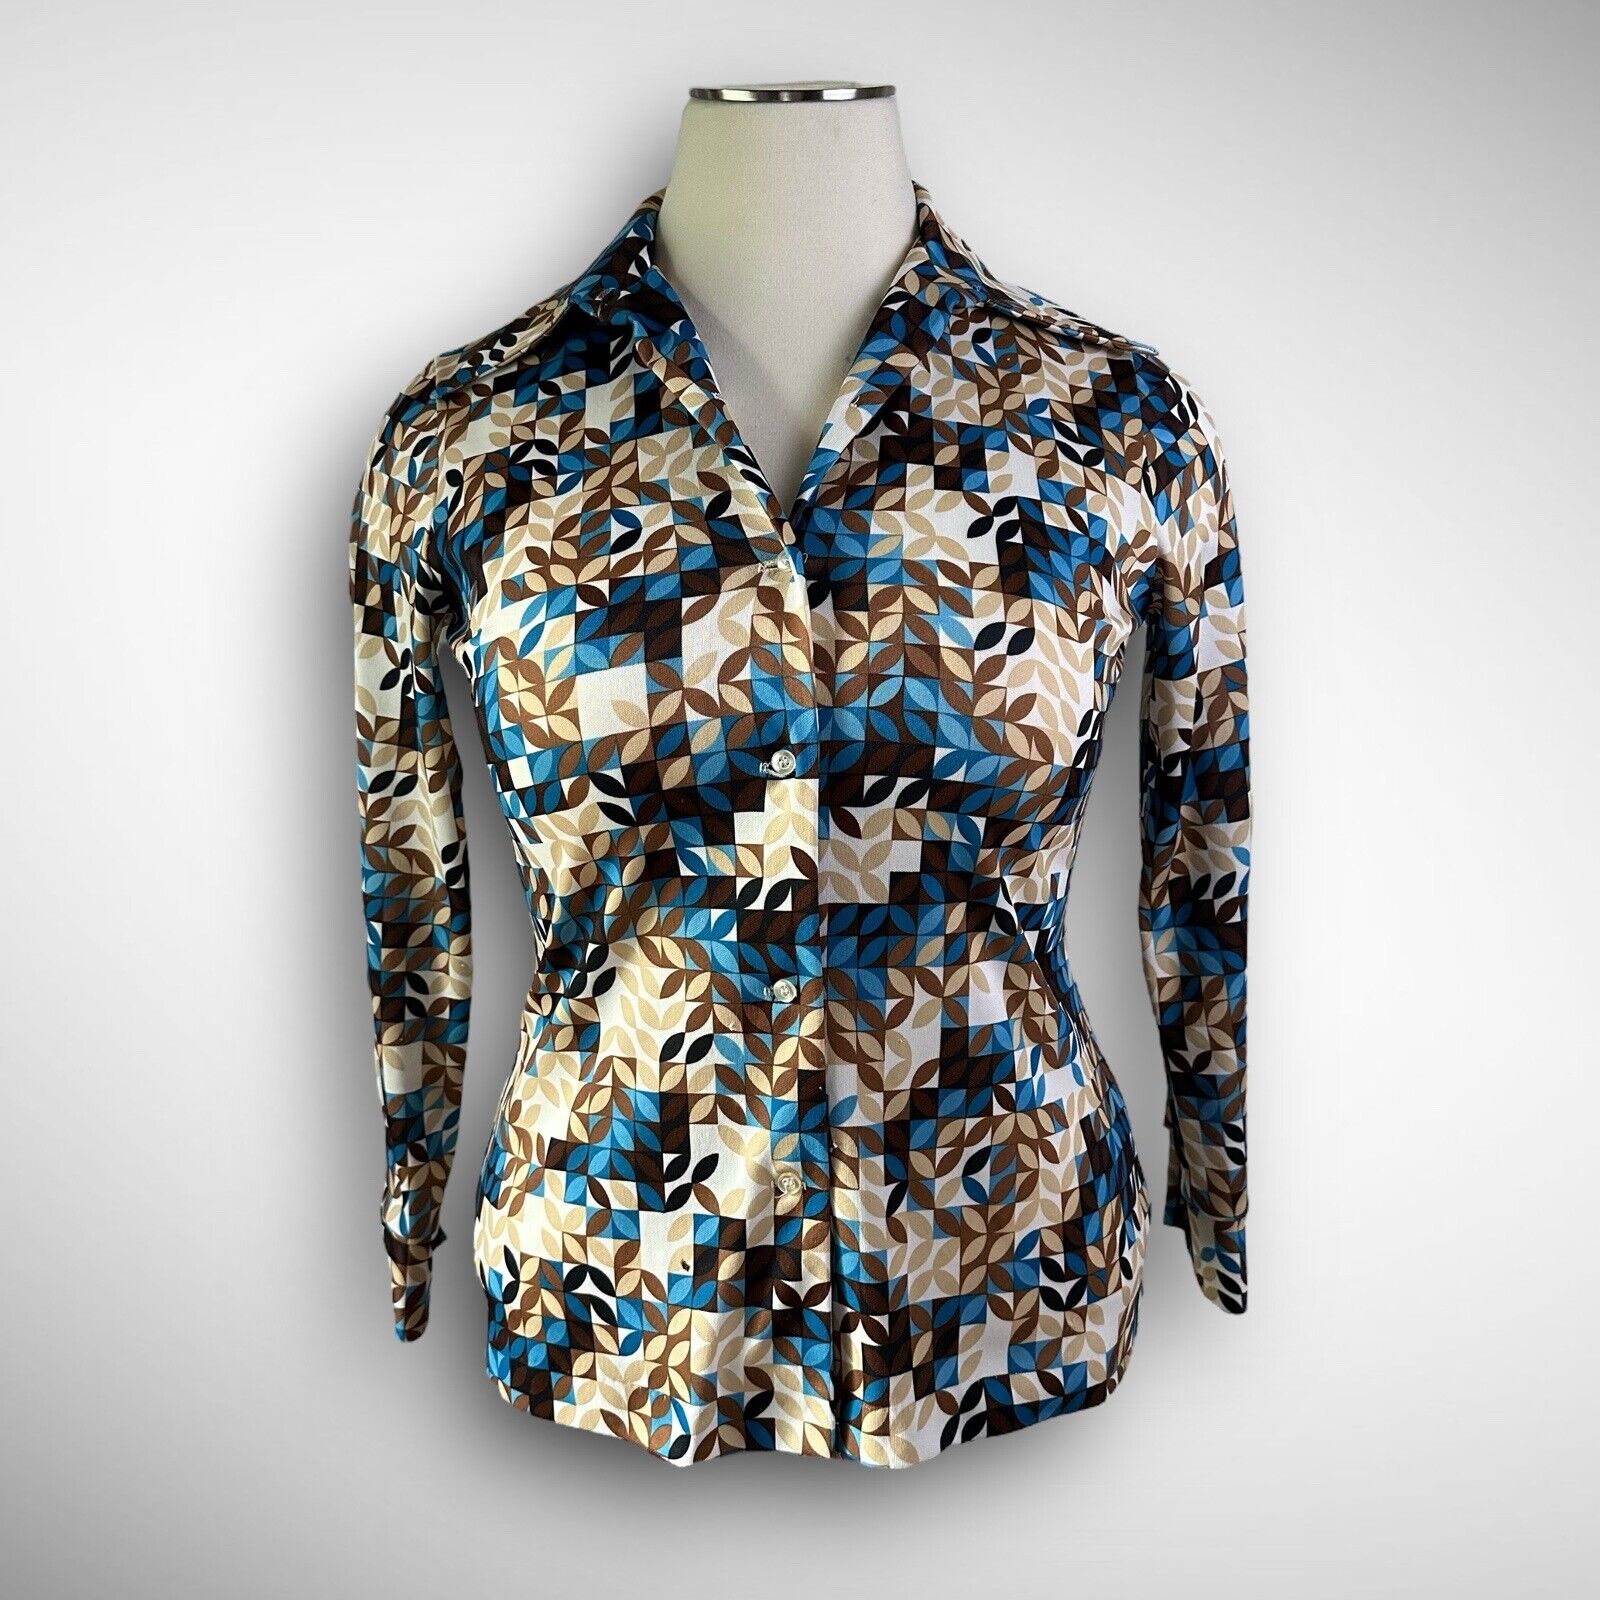 Vintage 70s Women’s Button Up Shirt Pointed Collar sz 18/XL Blue & Brown Pattern